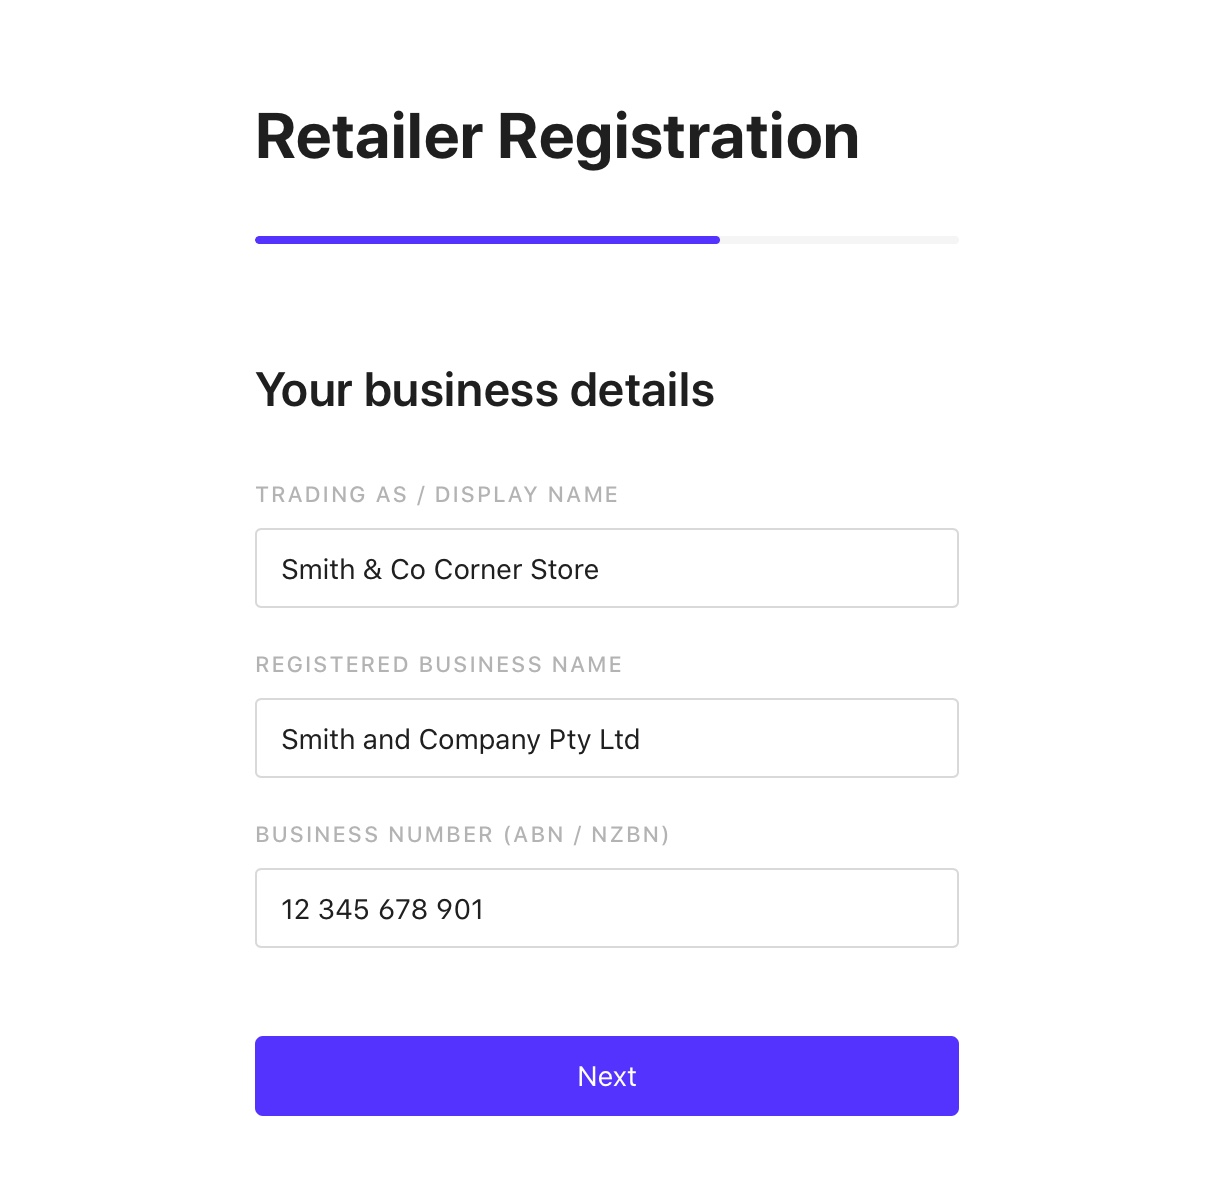 Retailer registration screenshot - business details